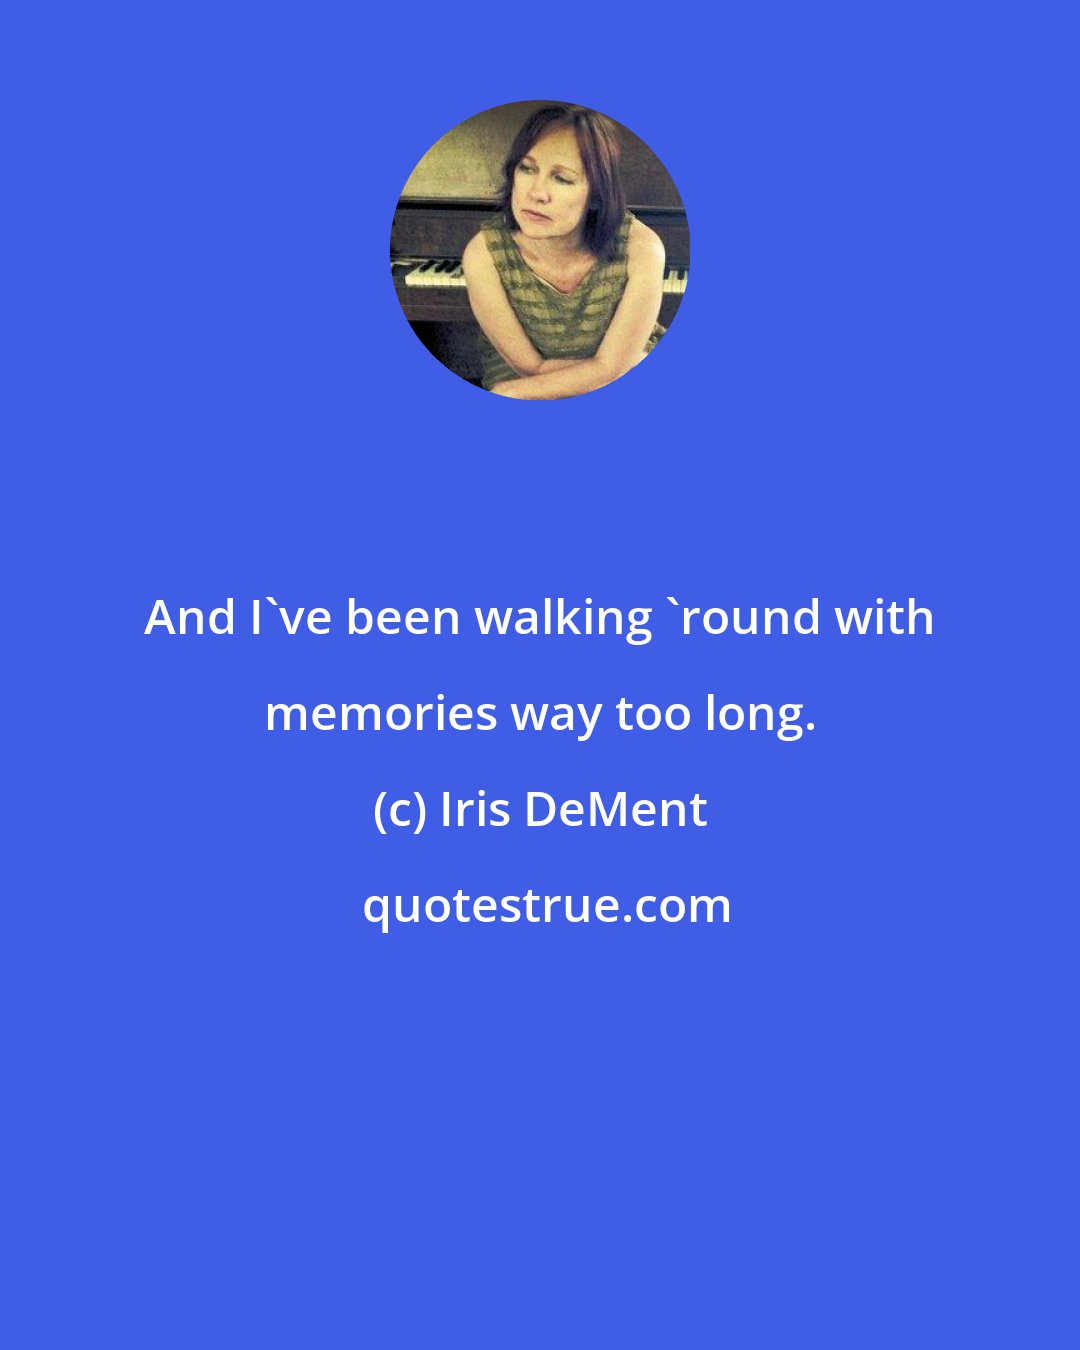 Iris DeMent: And I've been walking 'round with memories way too long.